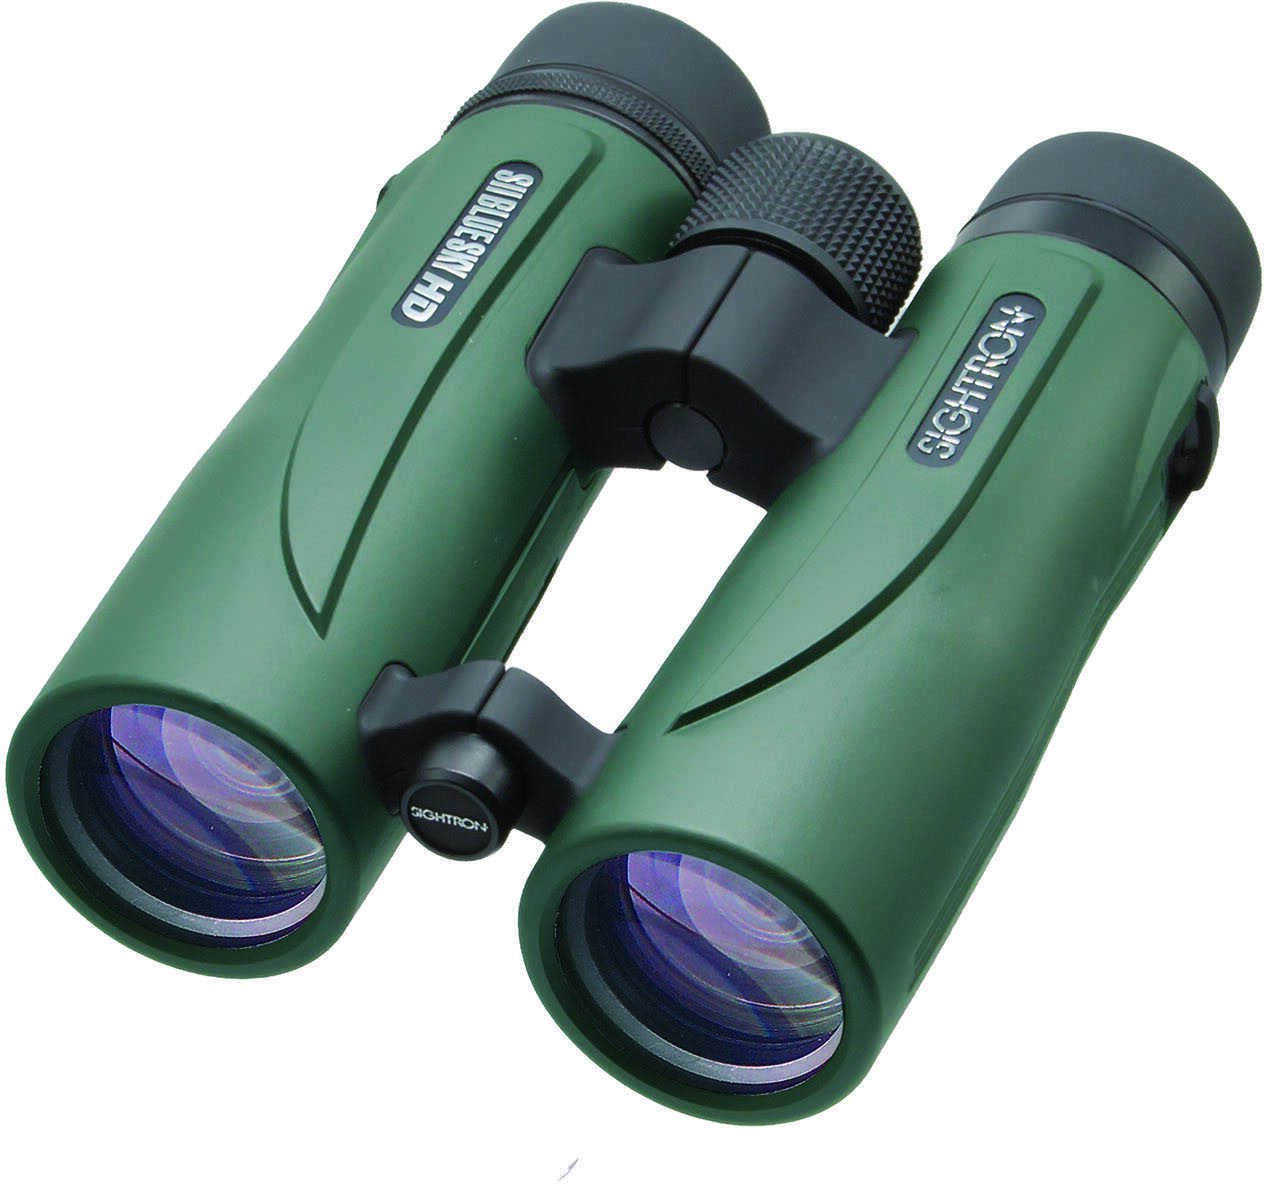 Sightron SII-HD Series Binoculars 10x42mm Green Model: 23017